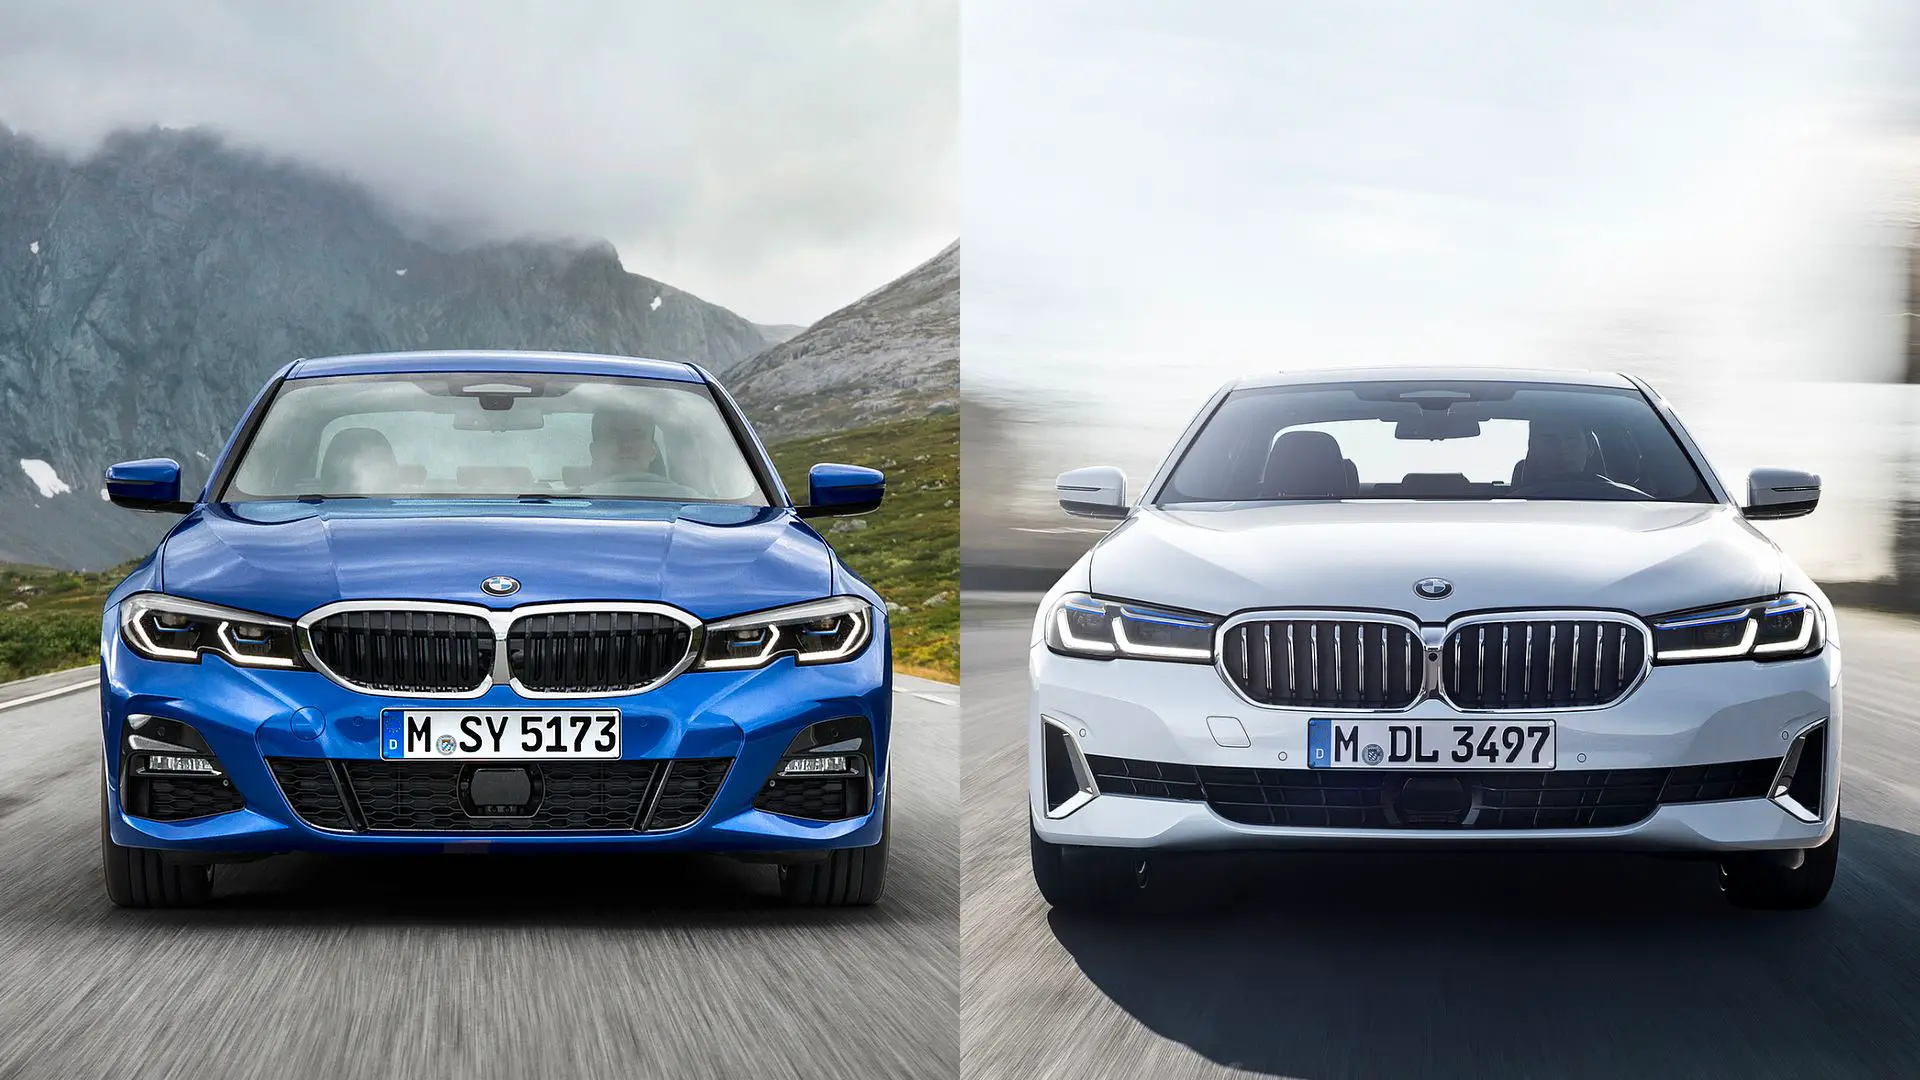 BMW 3 series vs 5 series